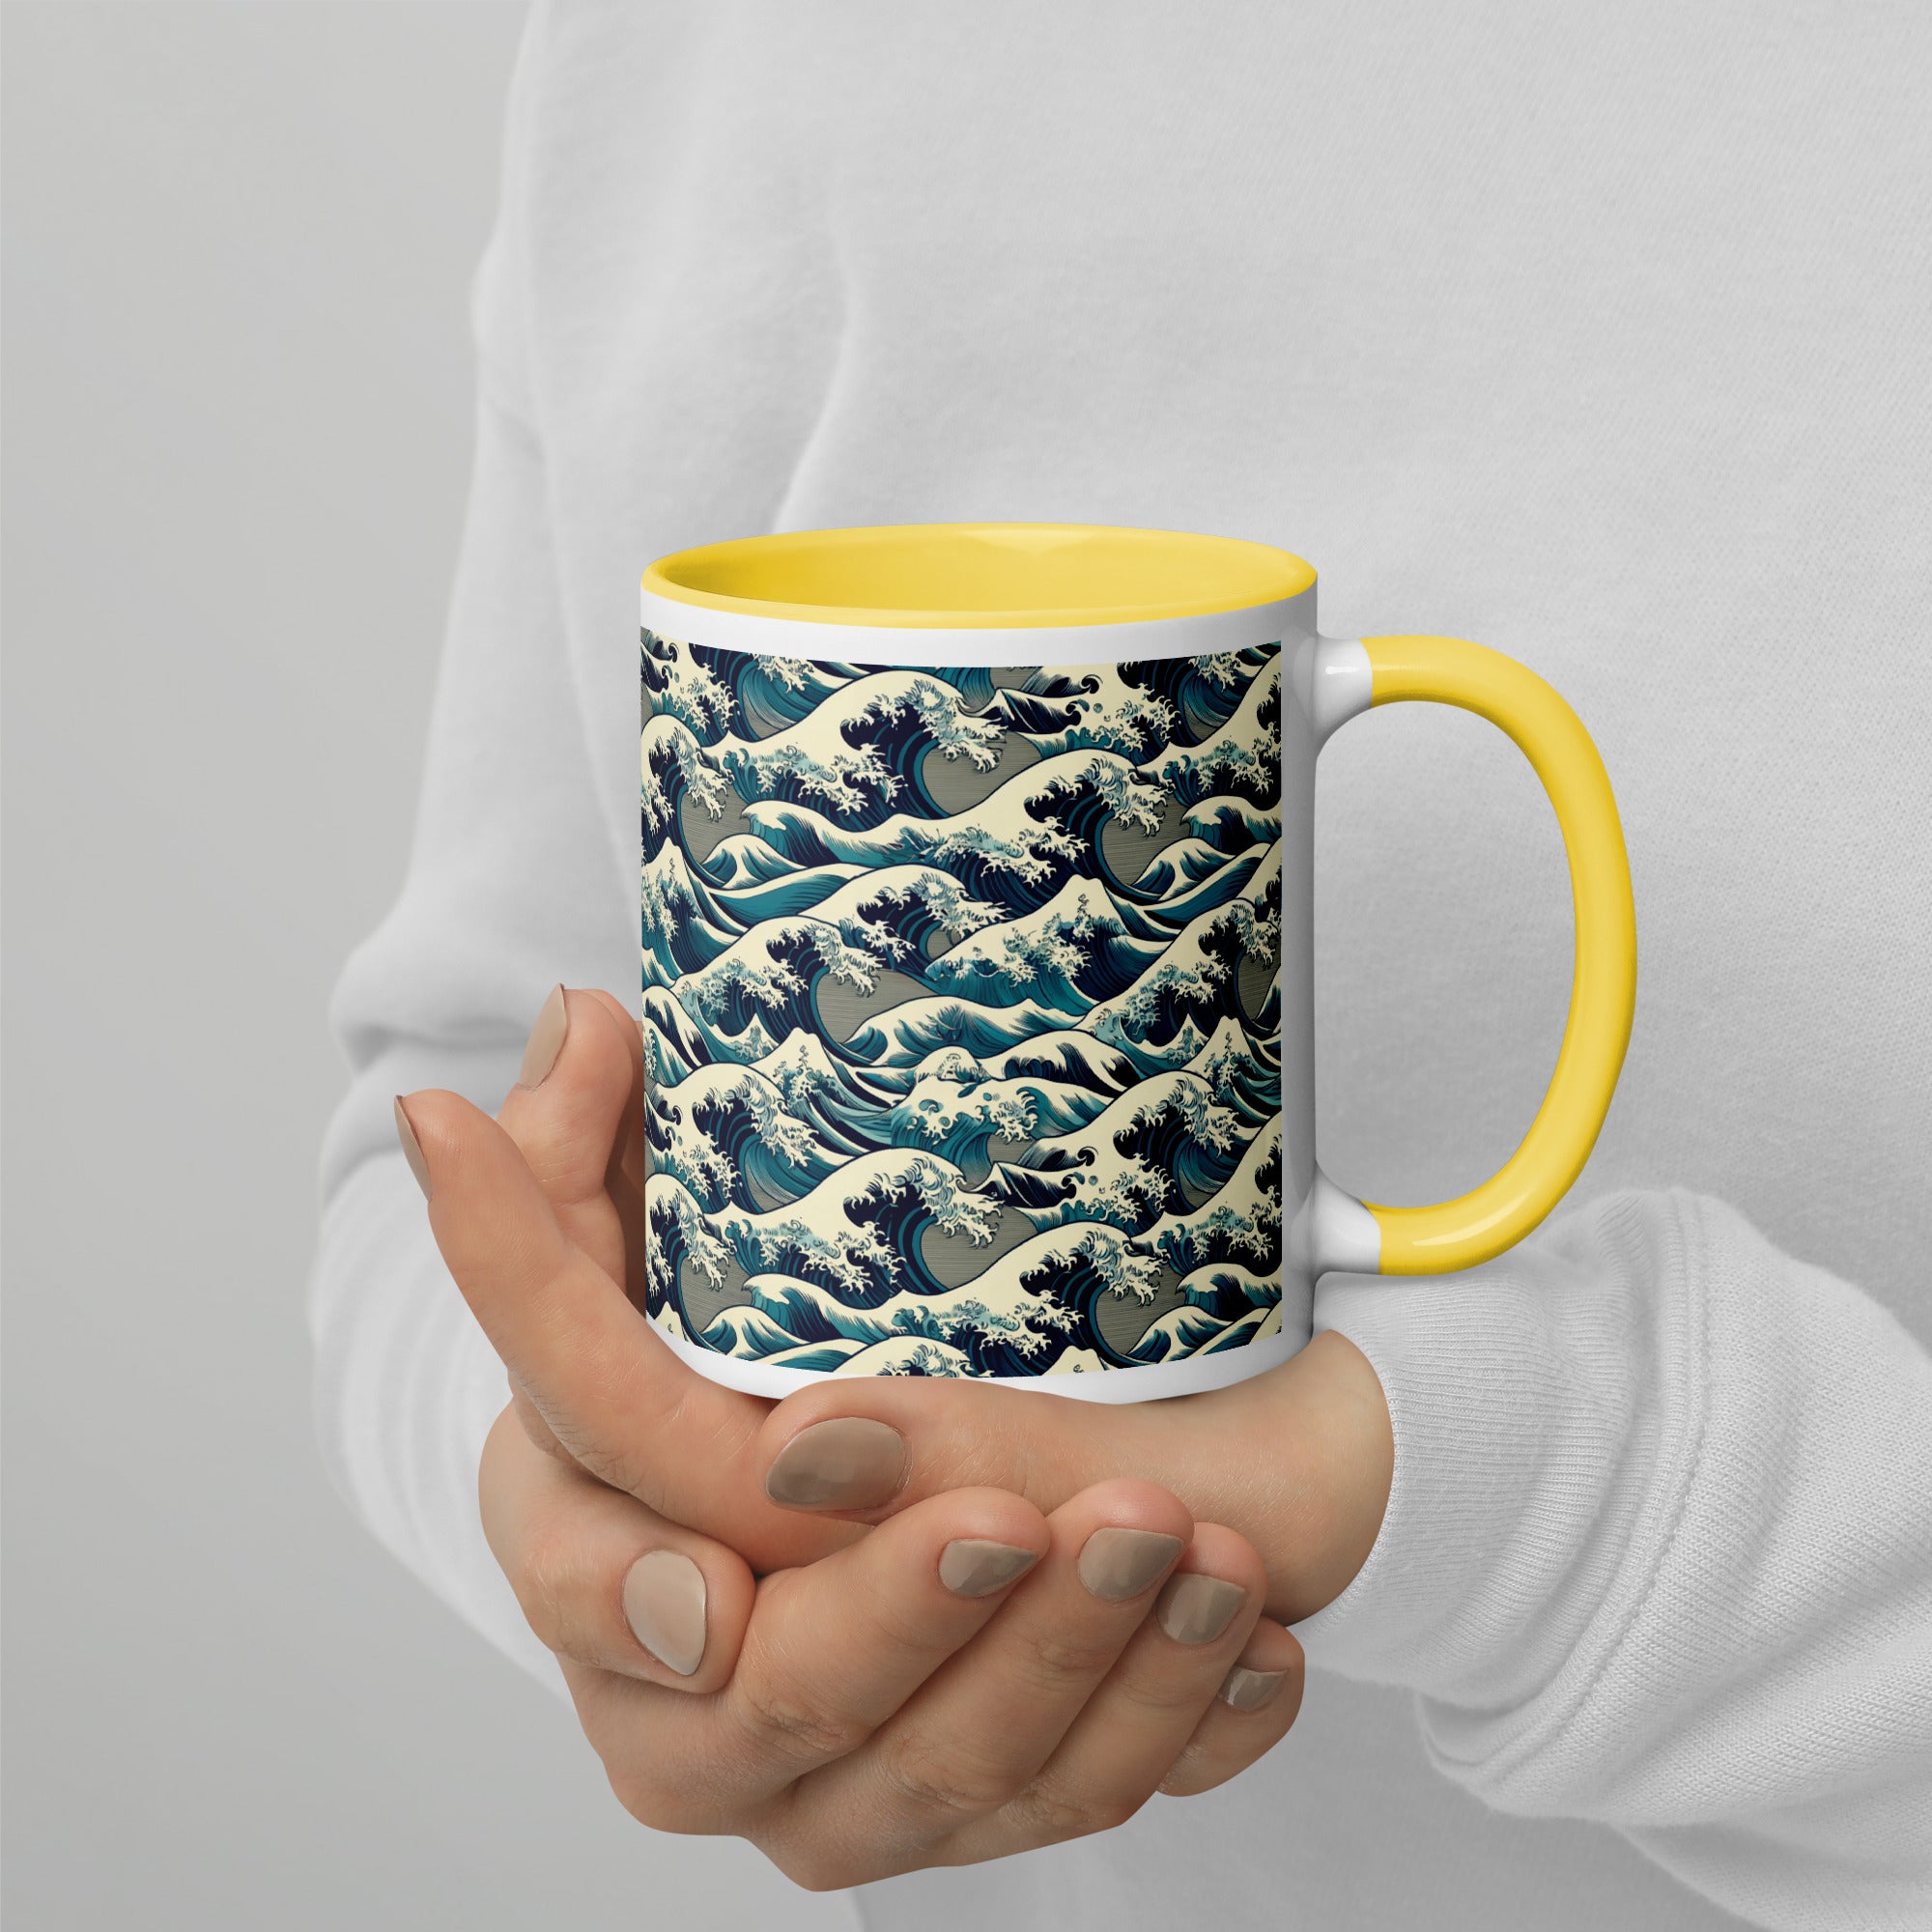 Hokusai 'The Great Wave off Kanagawa' Famous Painting Ceramic Mug | Premium Art Mug